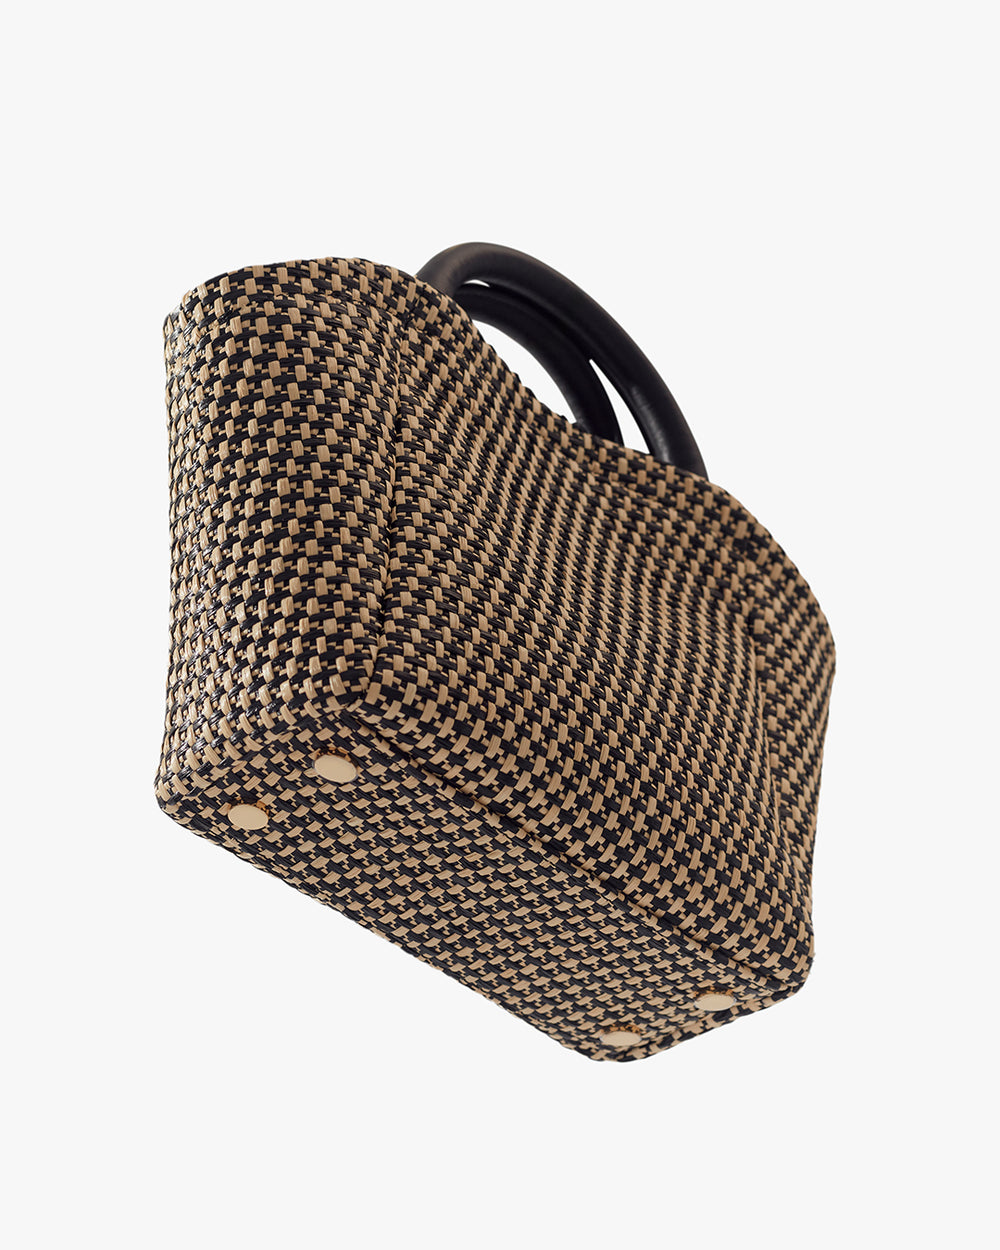 Patterned woven handbag with short handles